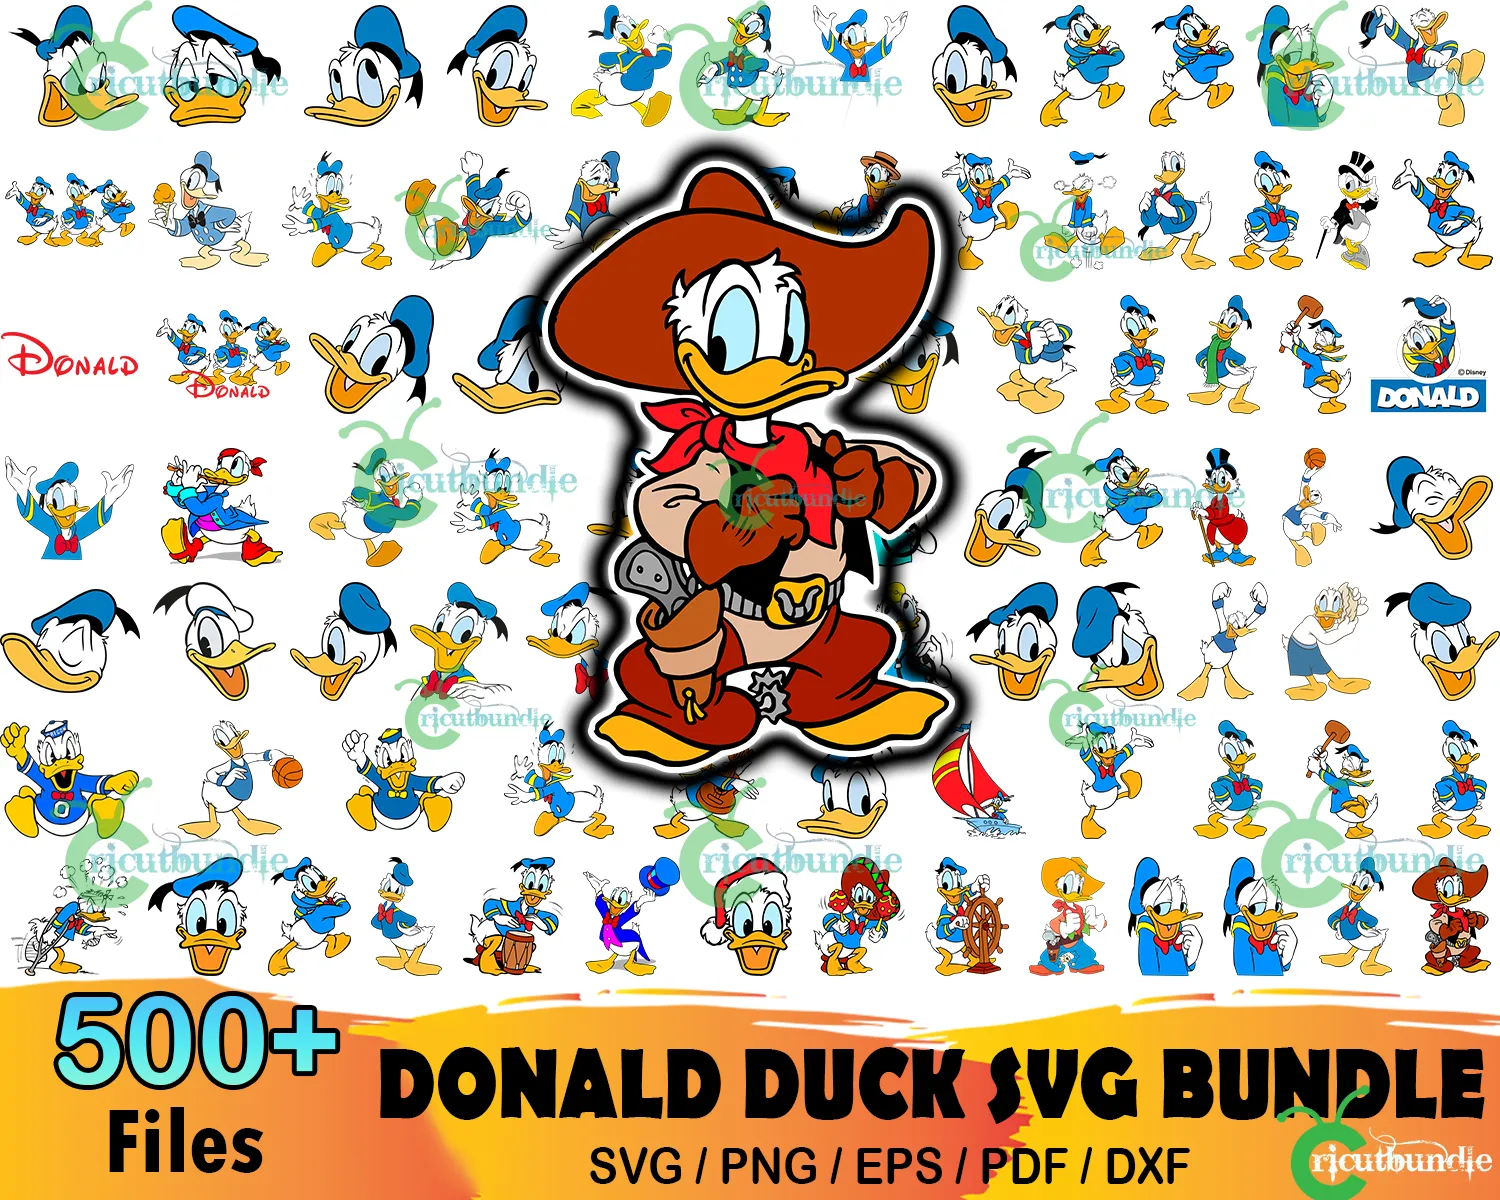 LOUIS VUITTON feat. DISNEY - donald duck with bg